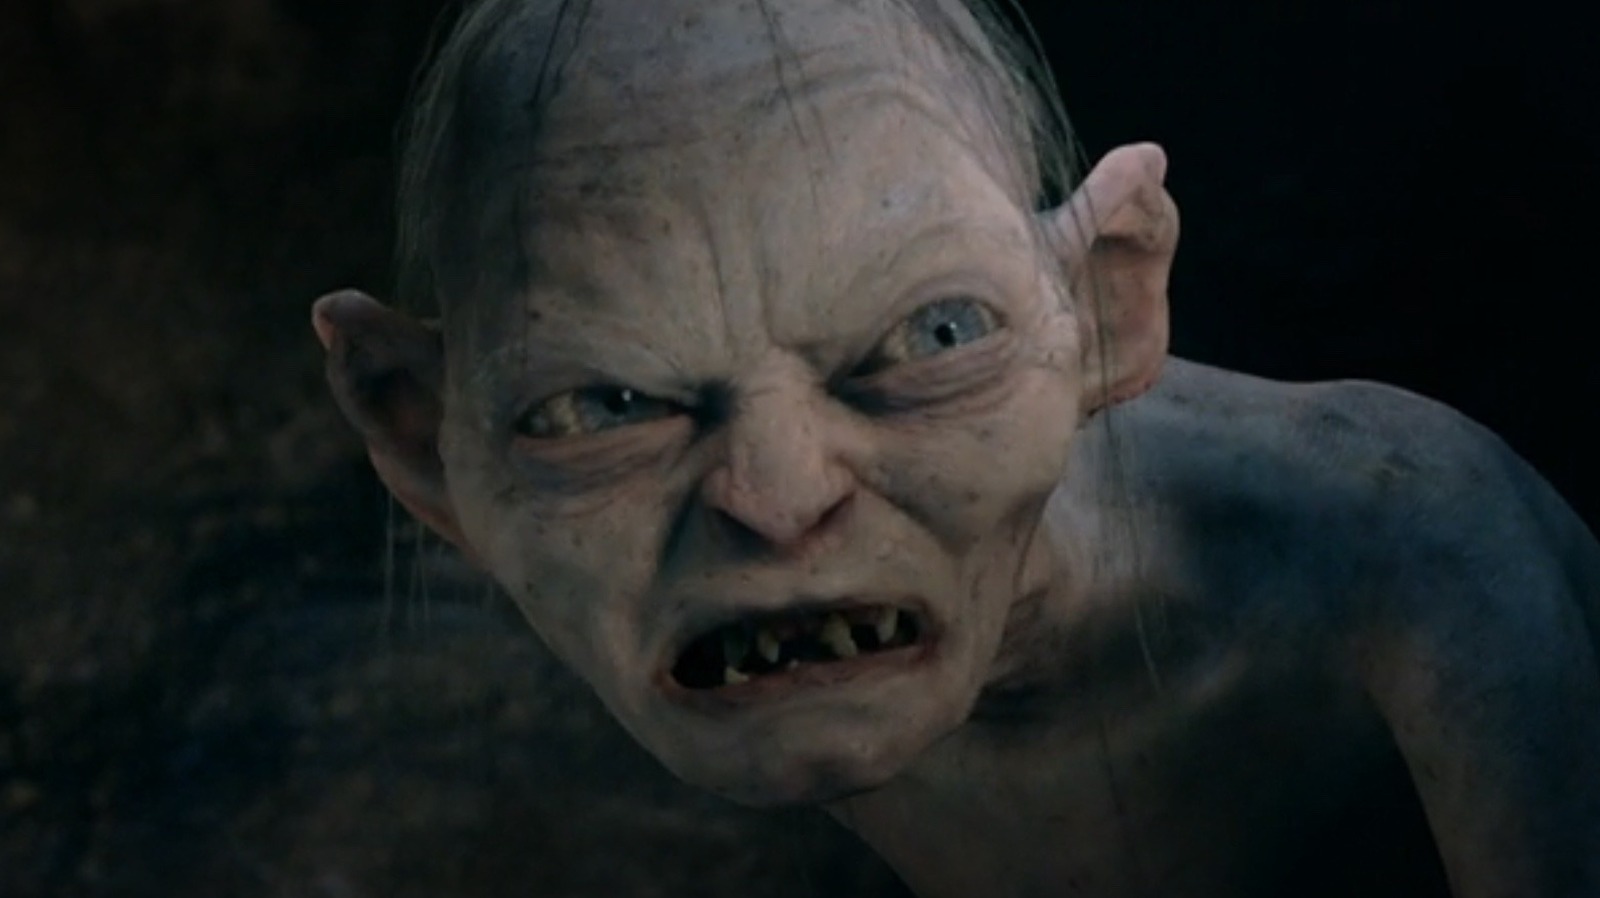 Hobbit' star creeps out Savannah with Gollum voice